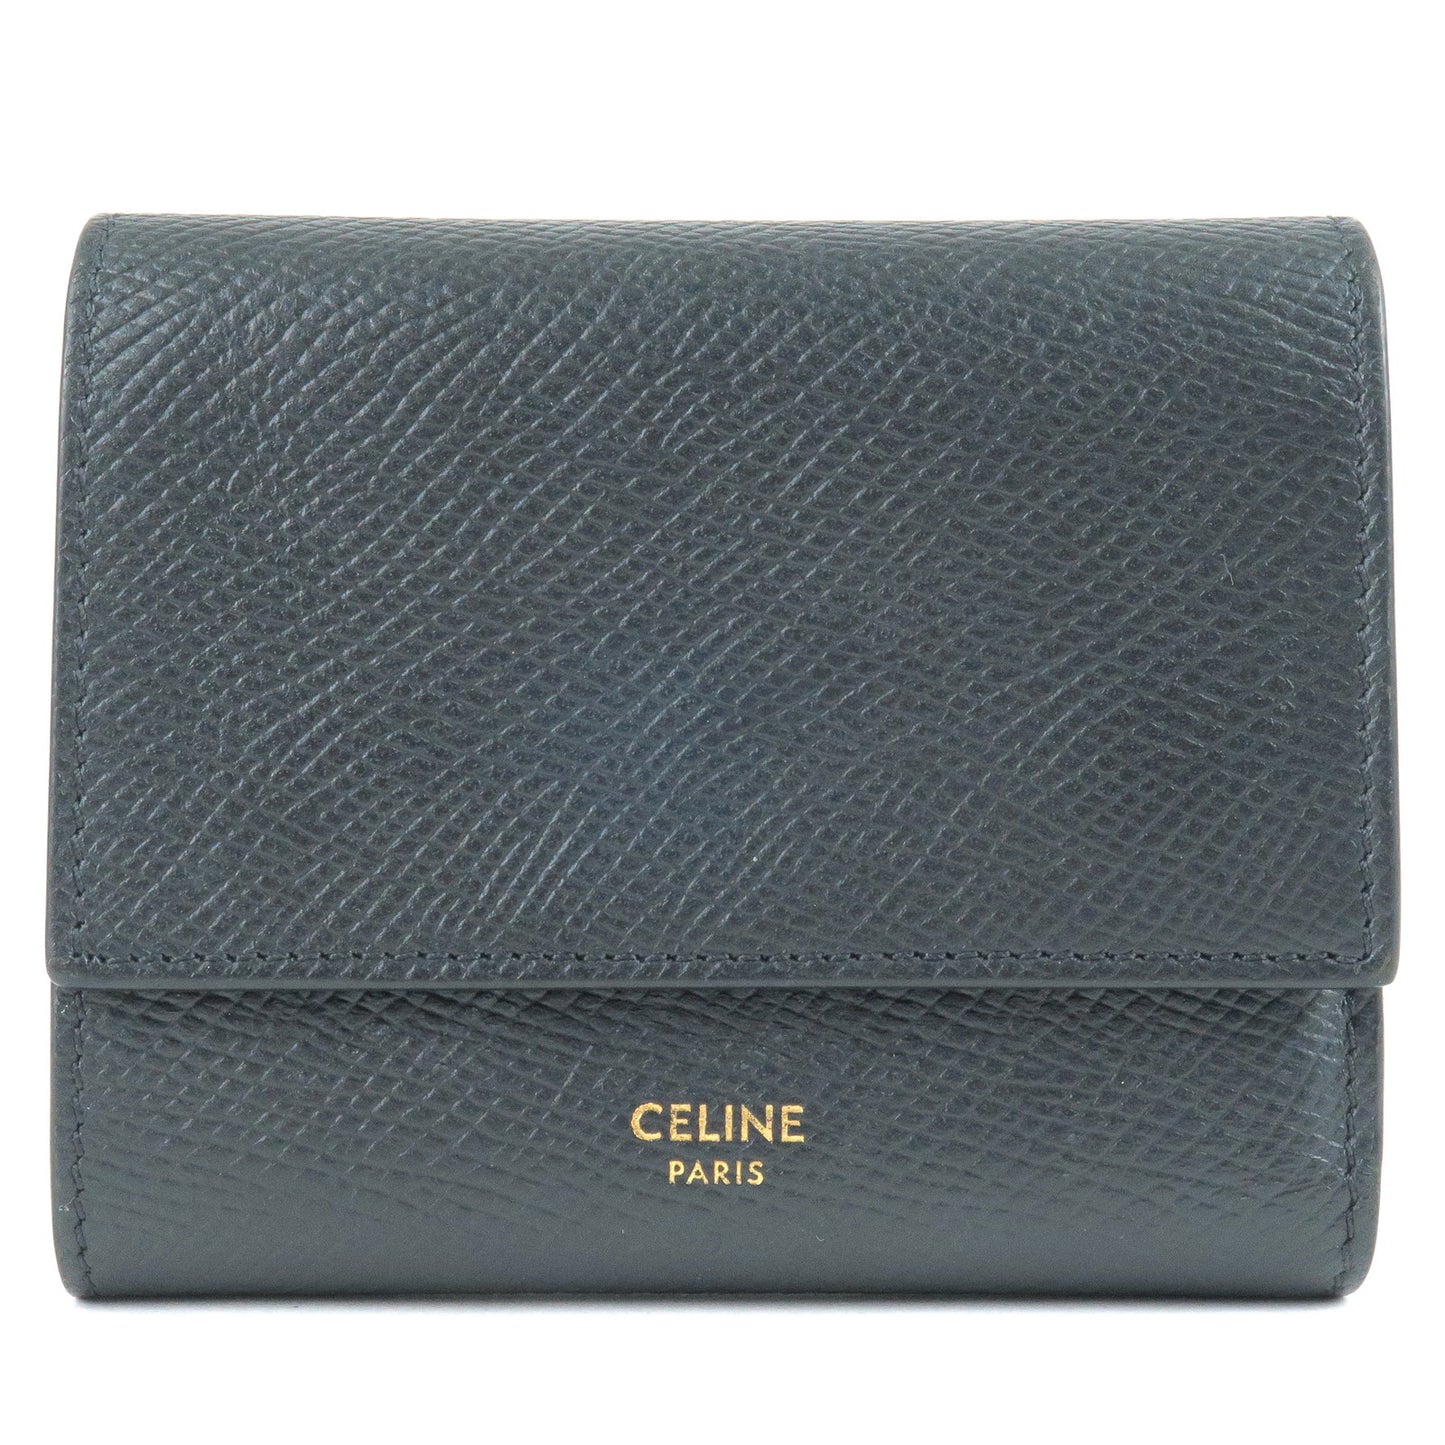 CELINE-Leather-Tri-Folded-Wallet-Small-Wallet-Black